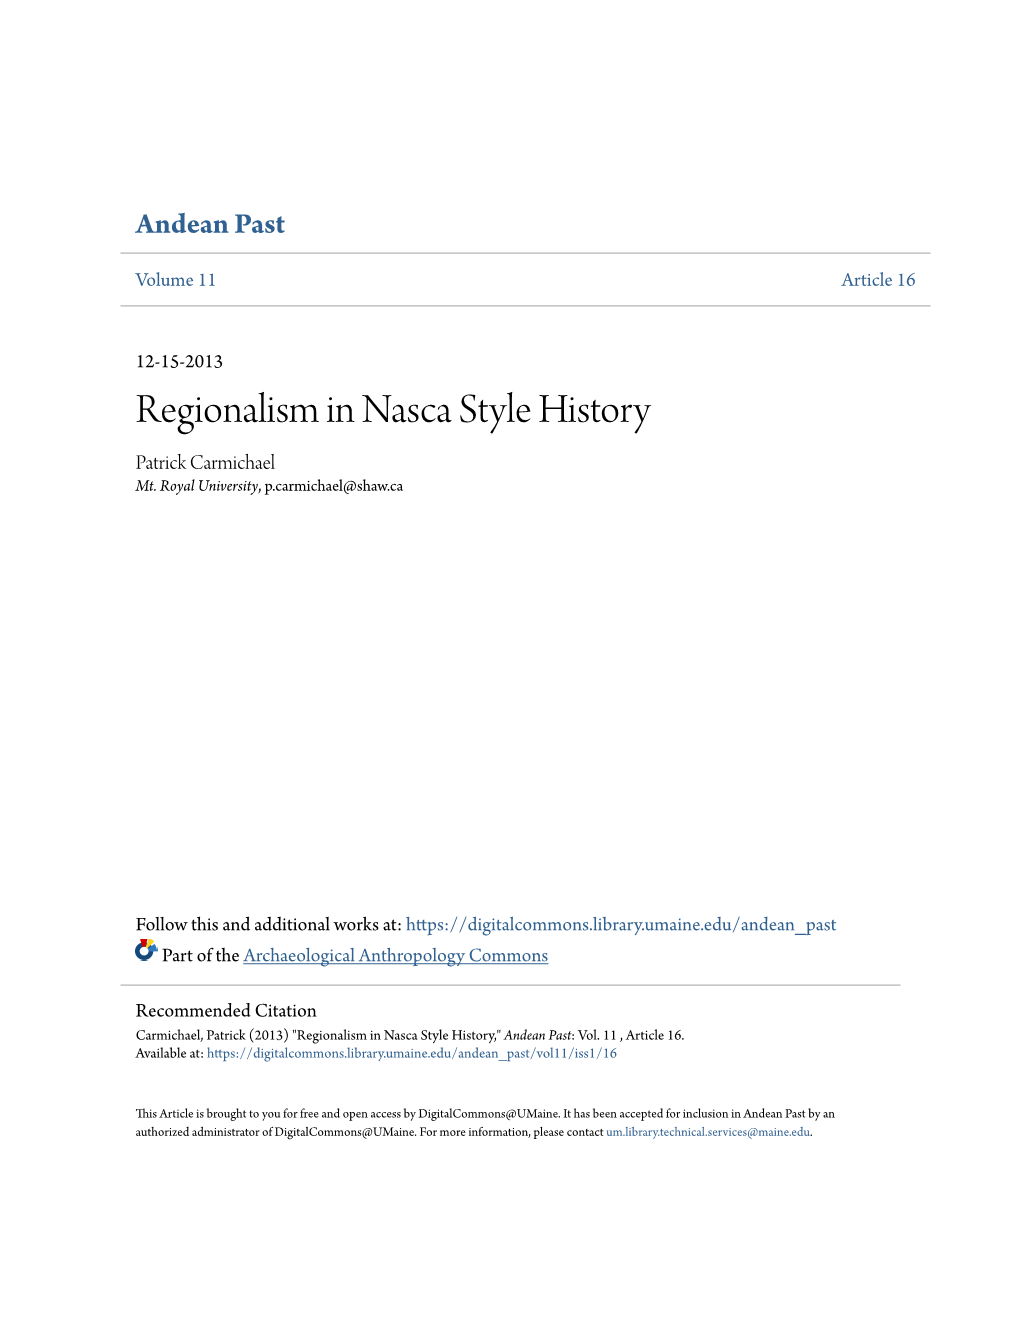 Regionalism in Nasca Style History Patrick Carmichael Mt